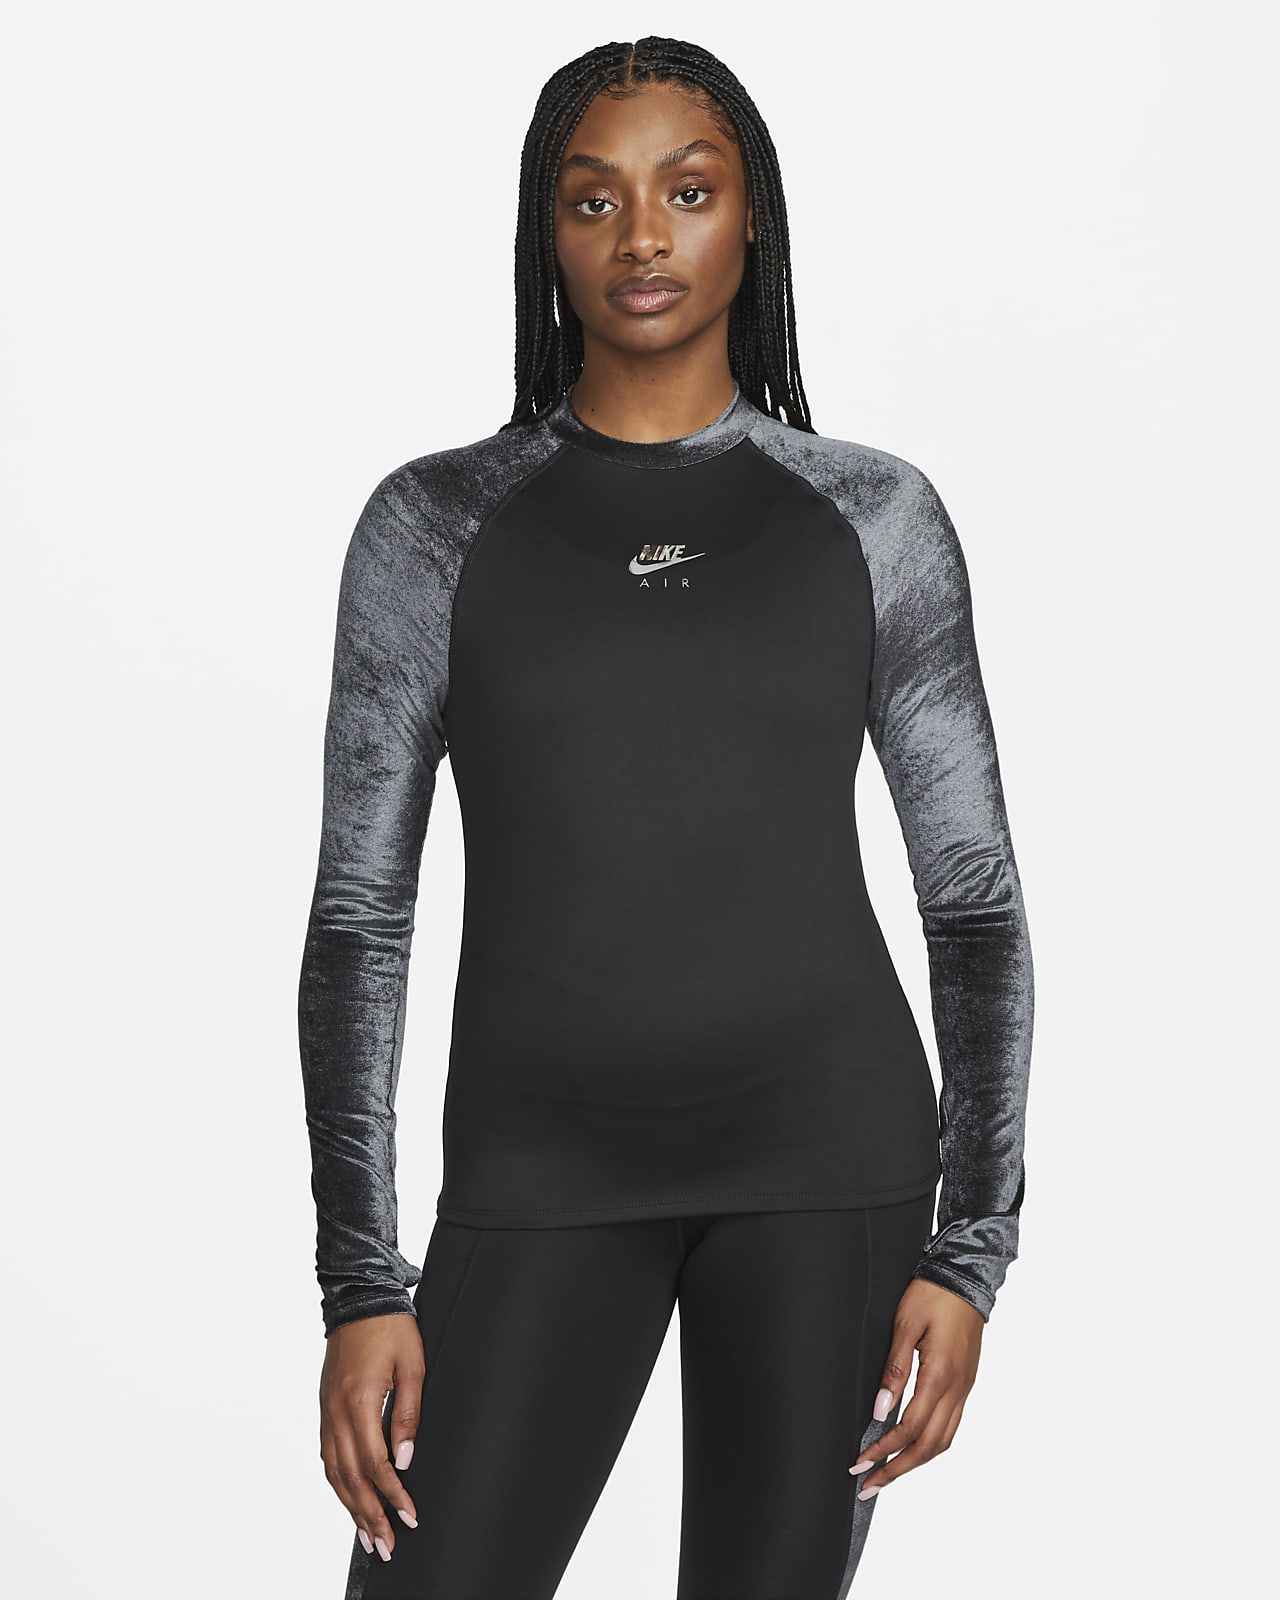 intelectual restaurante Anónimo Nike Femme Camiseta de capa media de running - Mujer. Nike ES